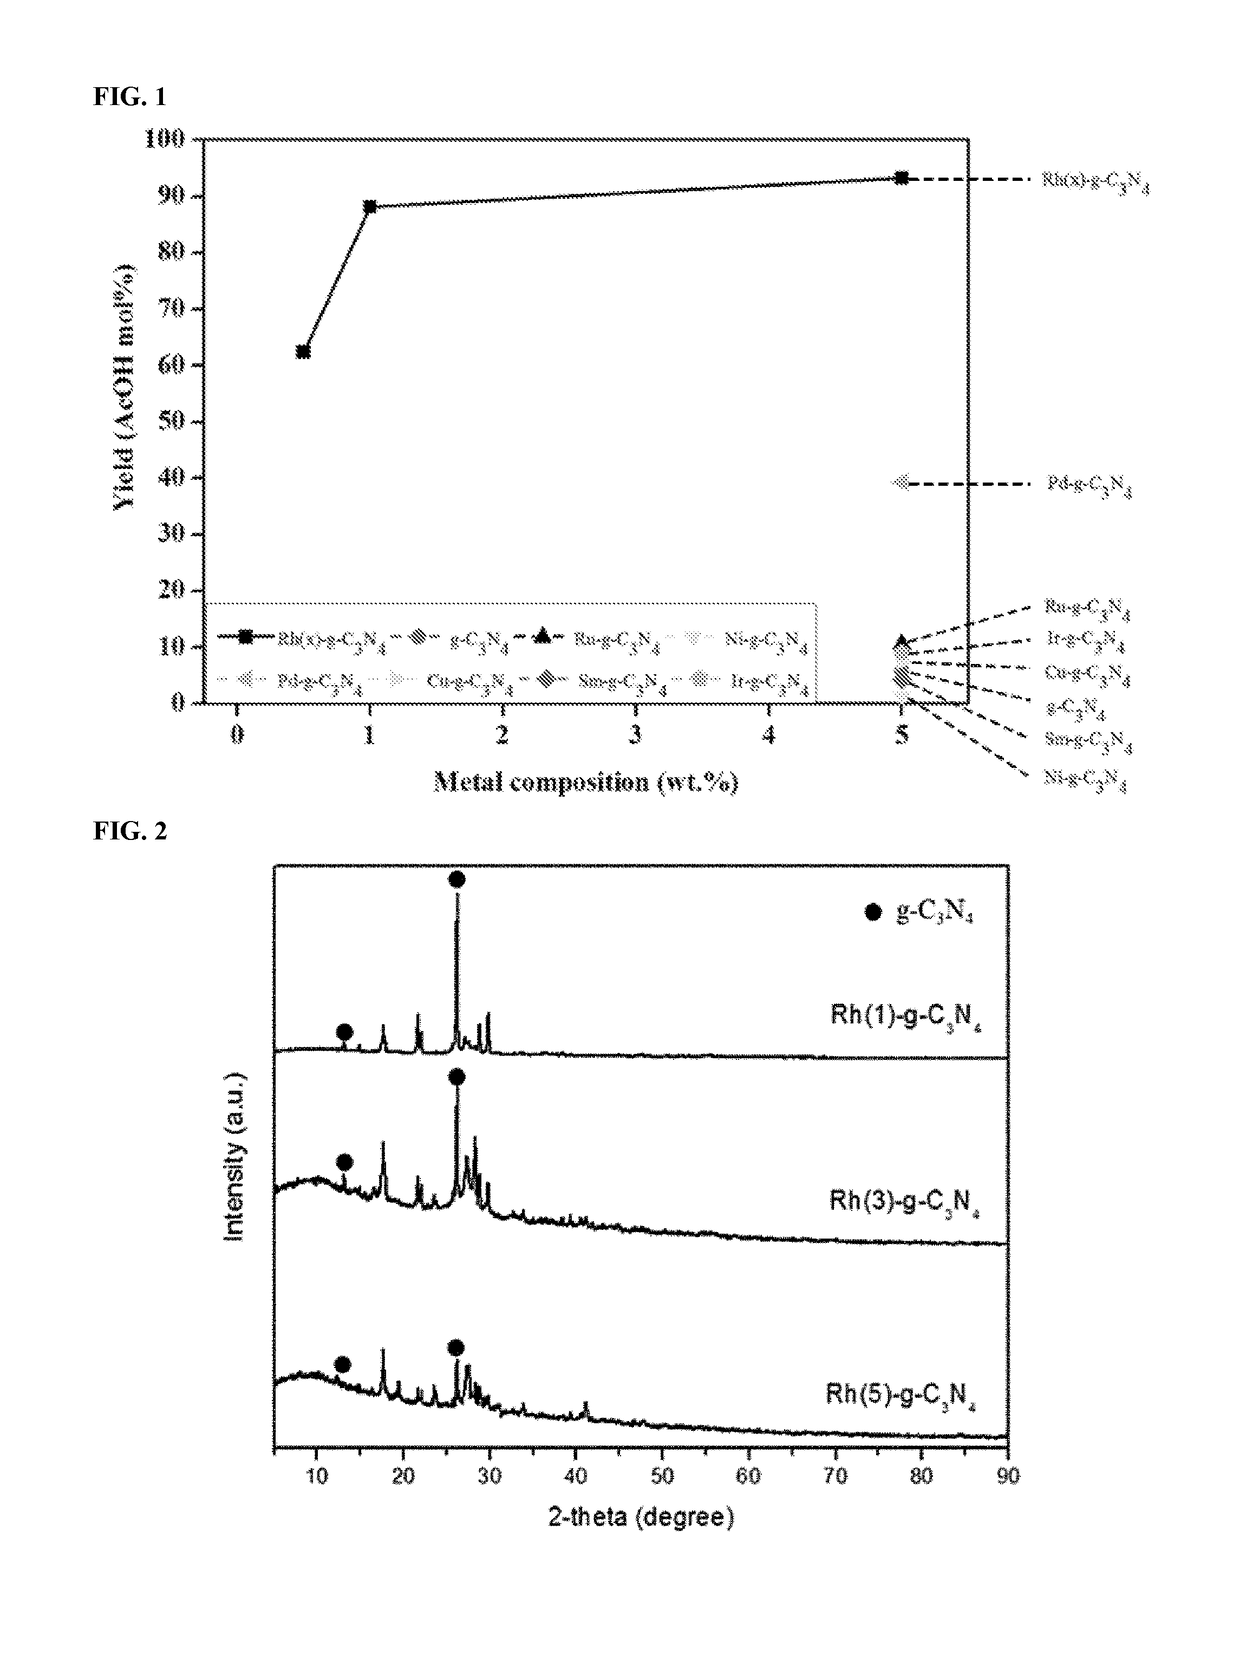 Carbon nitride heterogeneous catalyst containing rhodium, method for preparing the same, and method for preparing acetic acid using the same